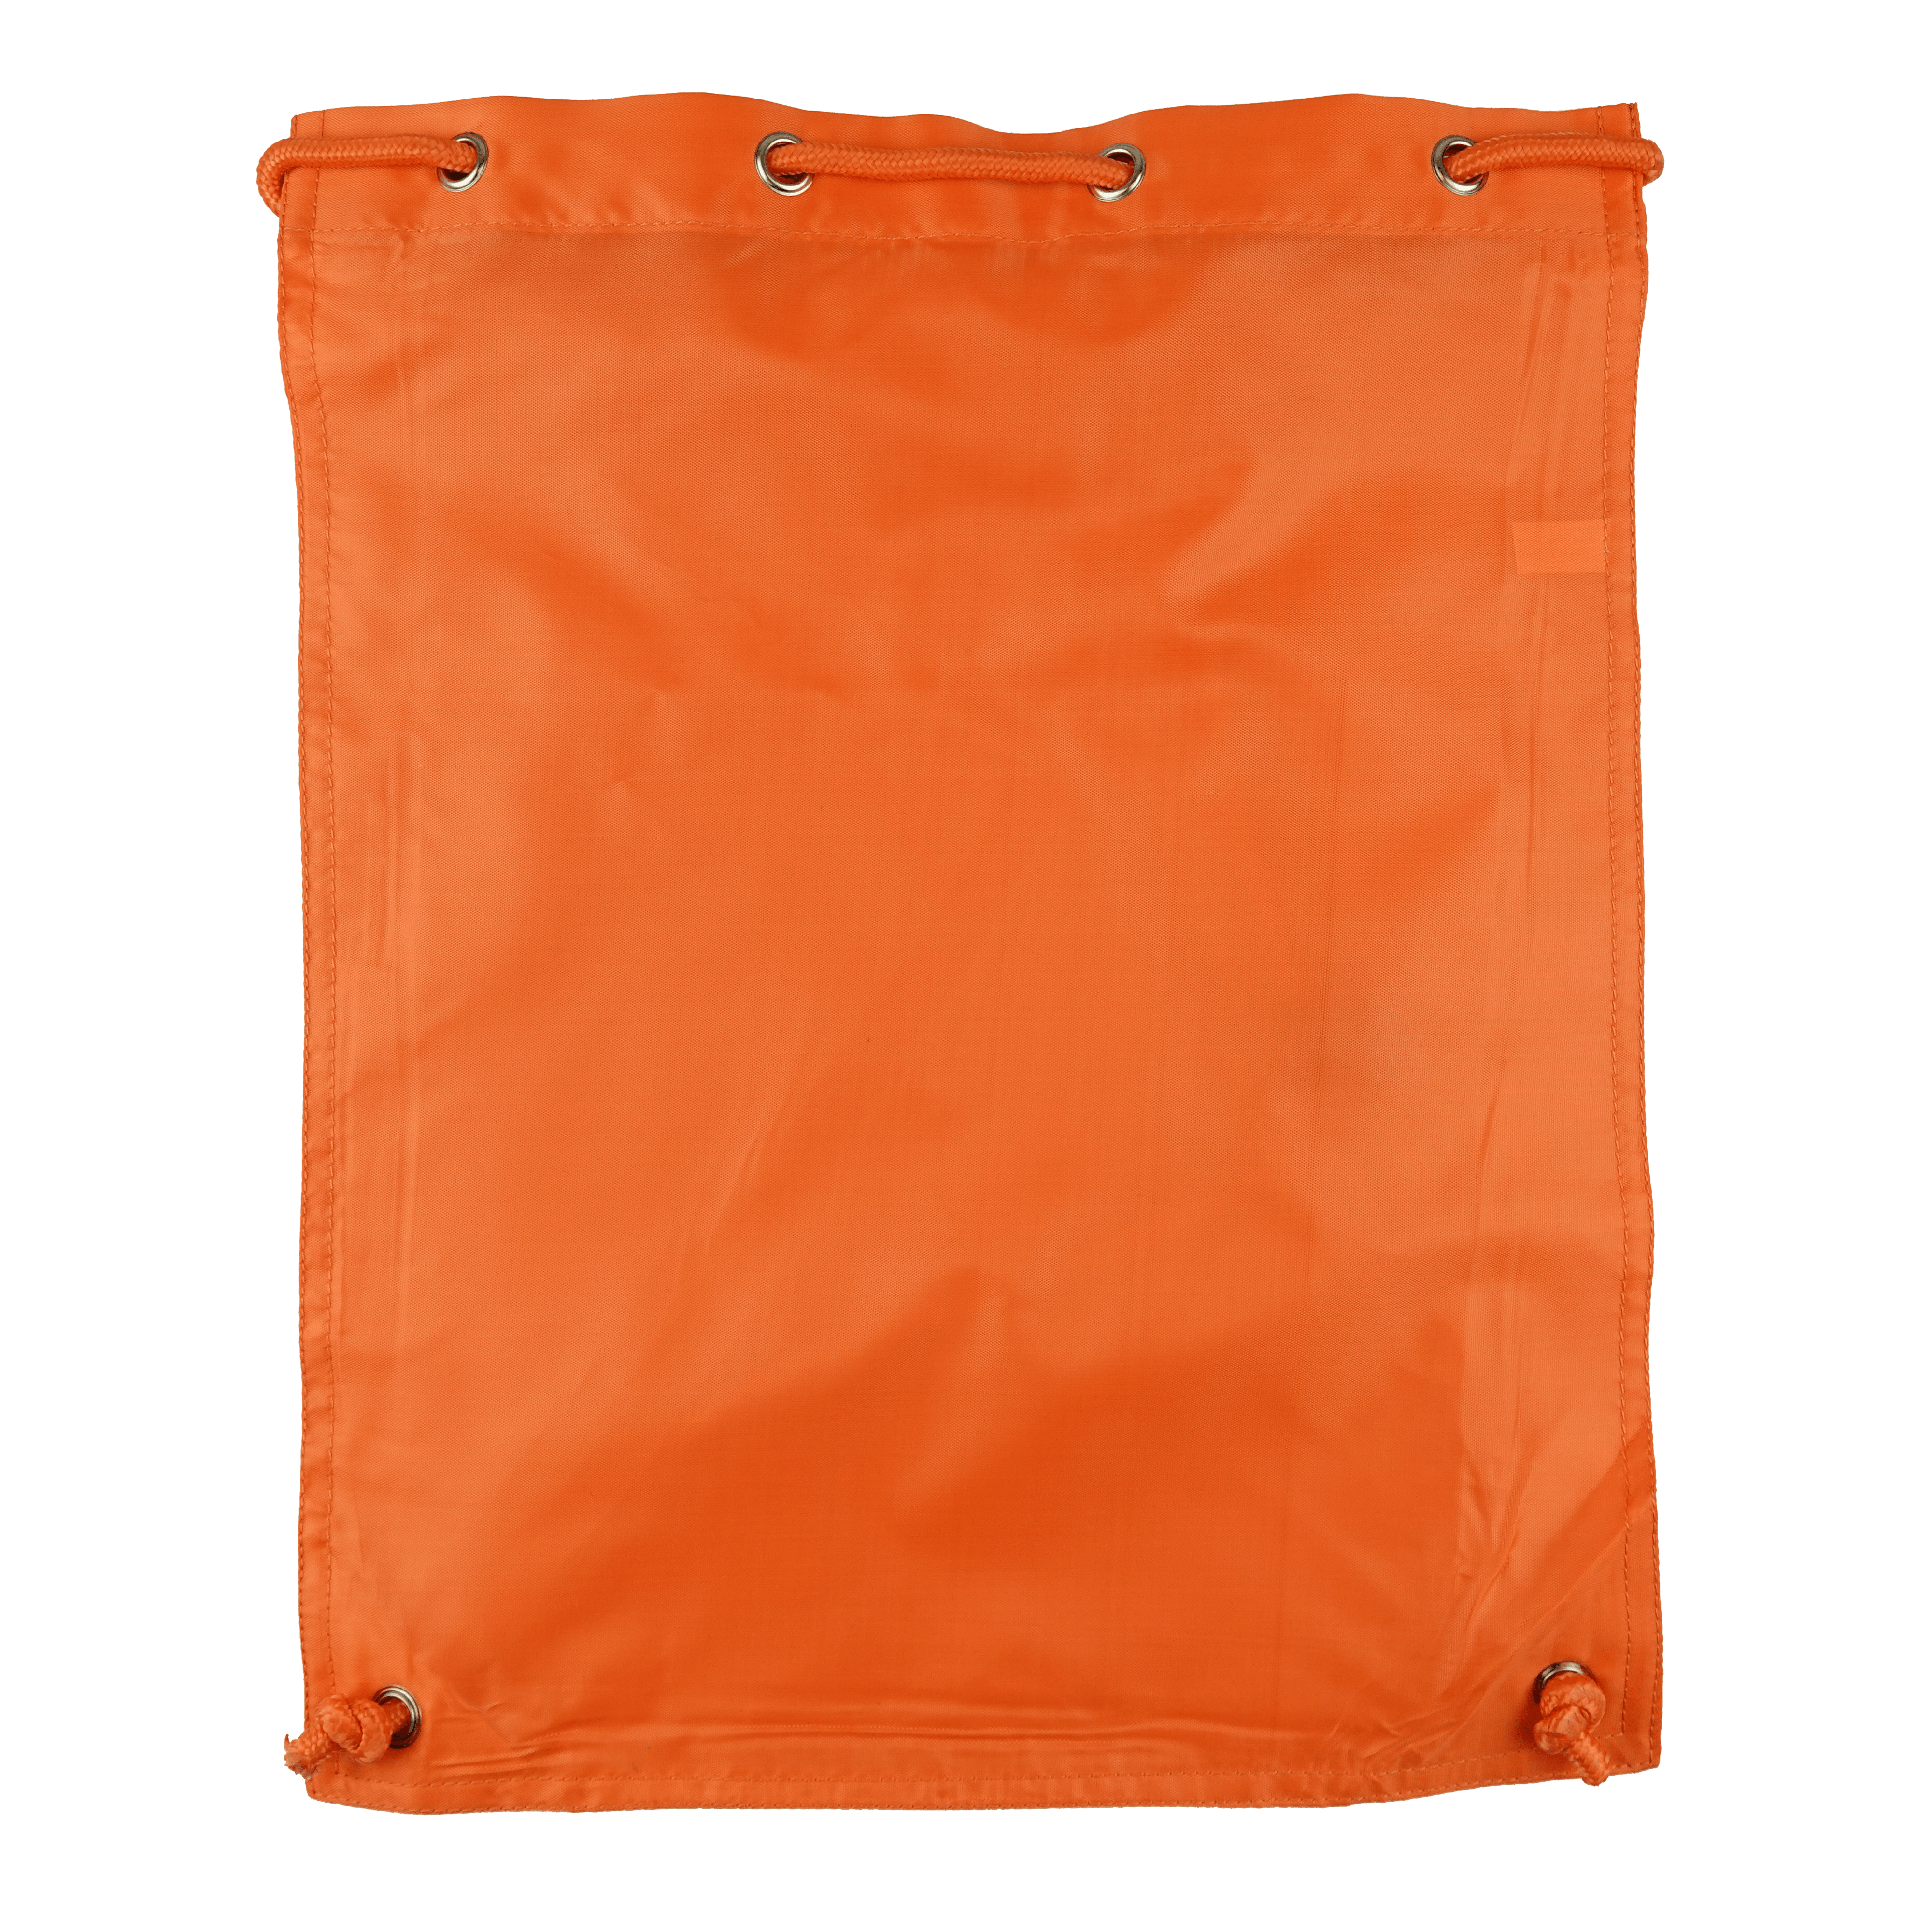 Gym bag orange